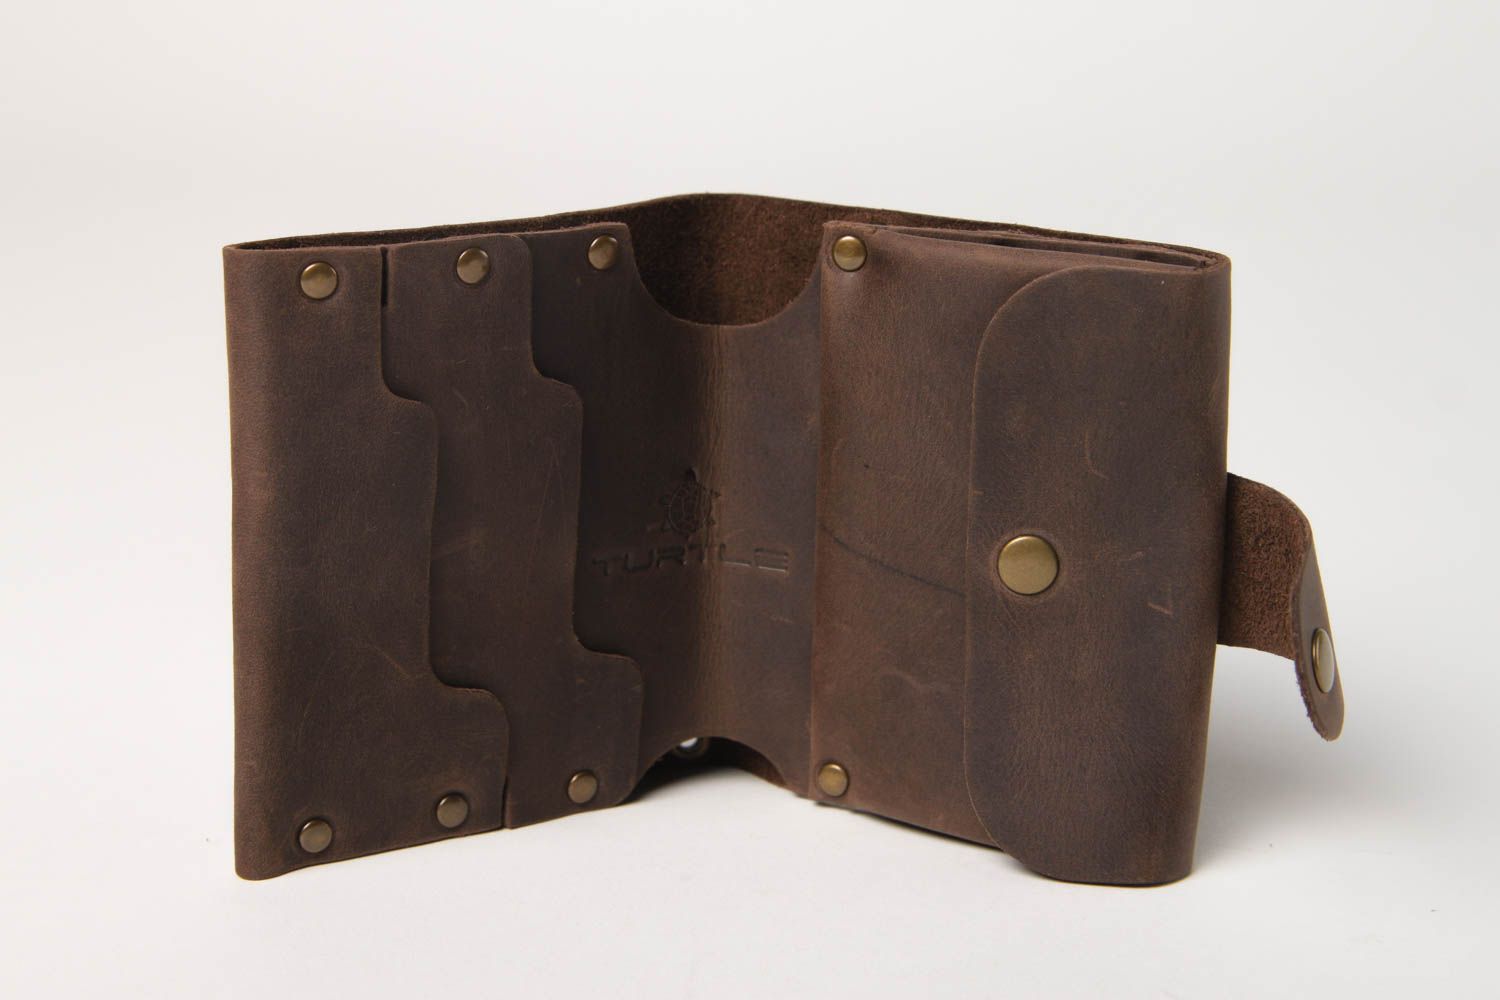 Stylish handmade leather purse designer accessories leather goods gift ideas photo 4